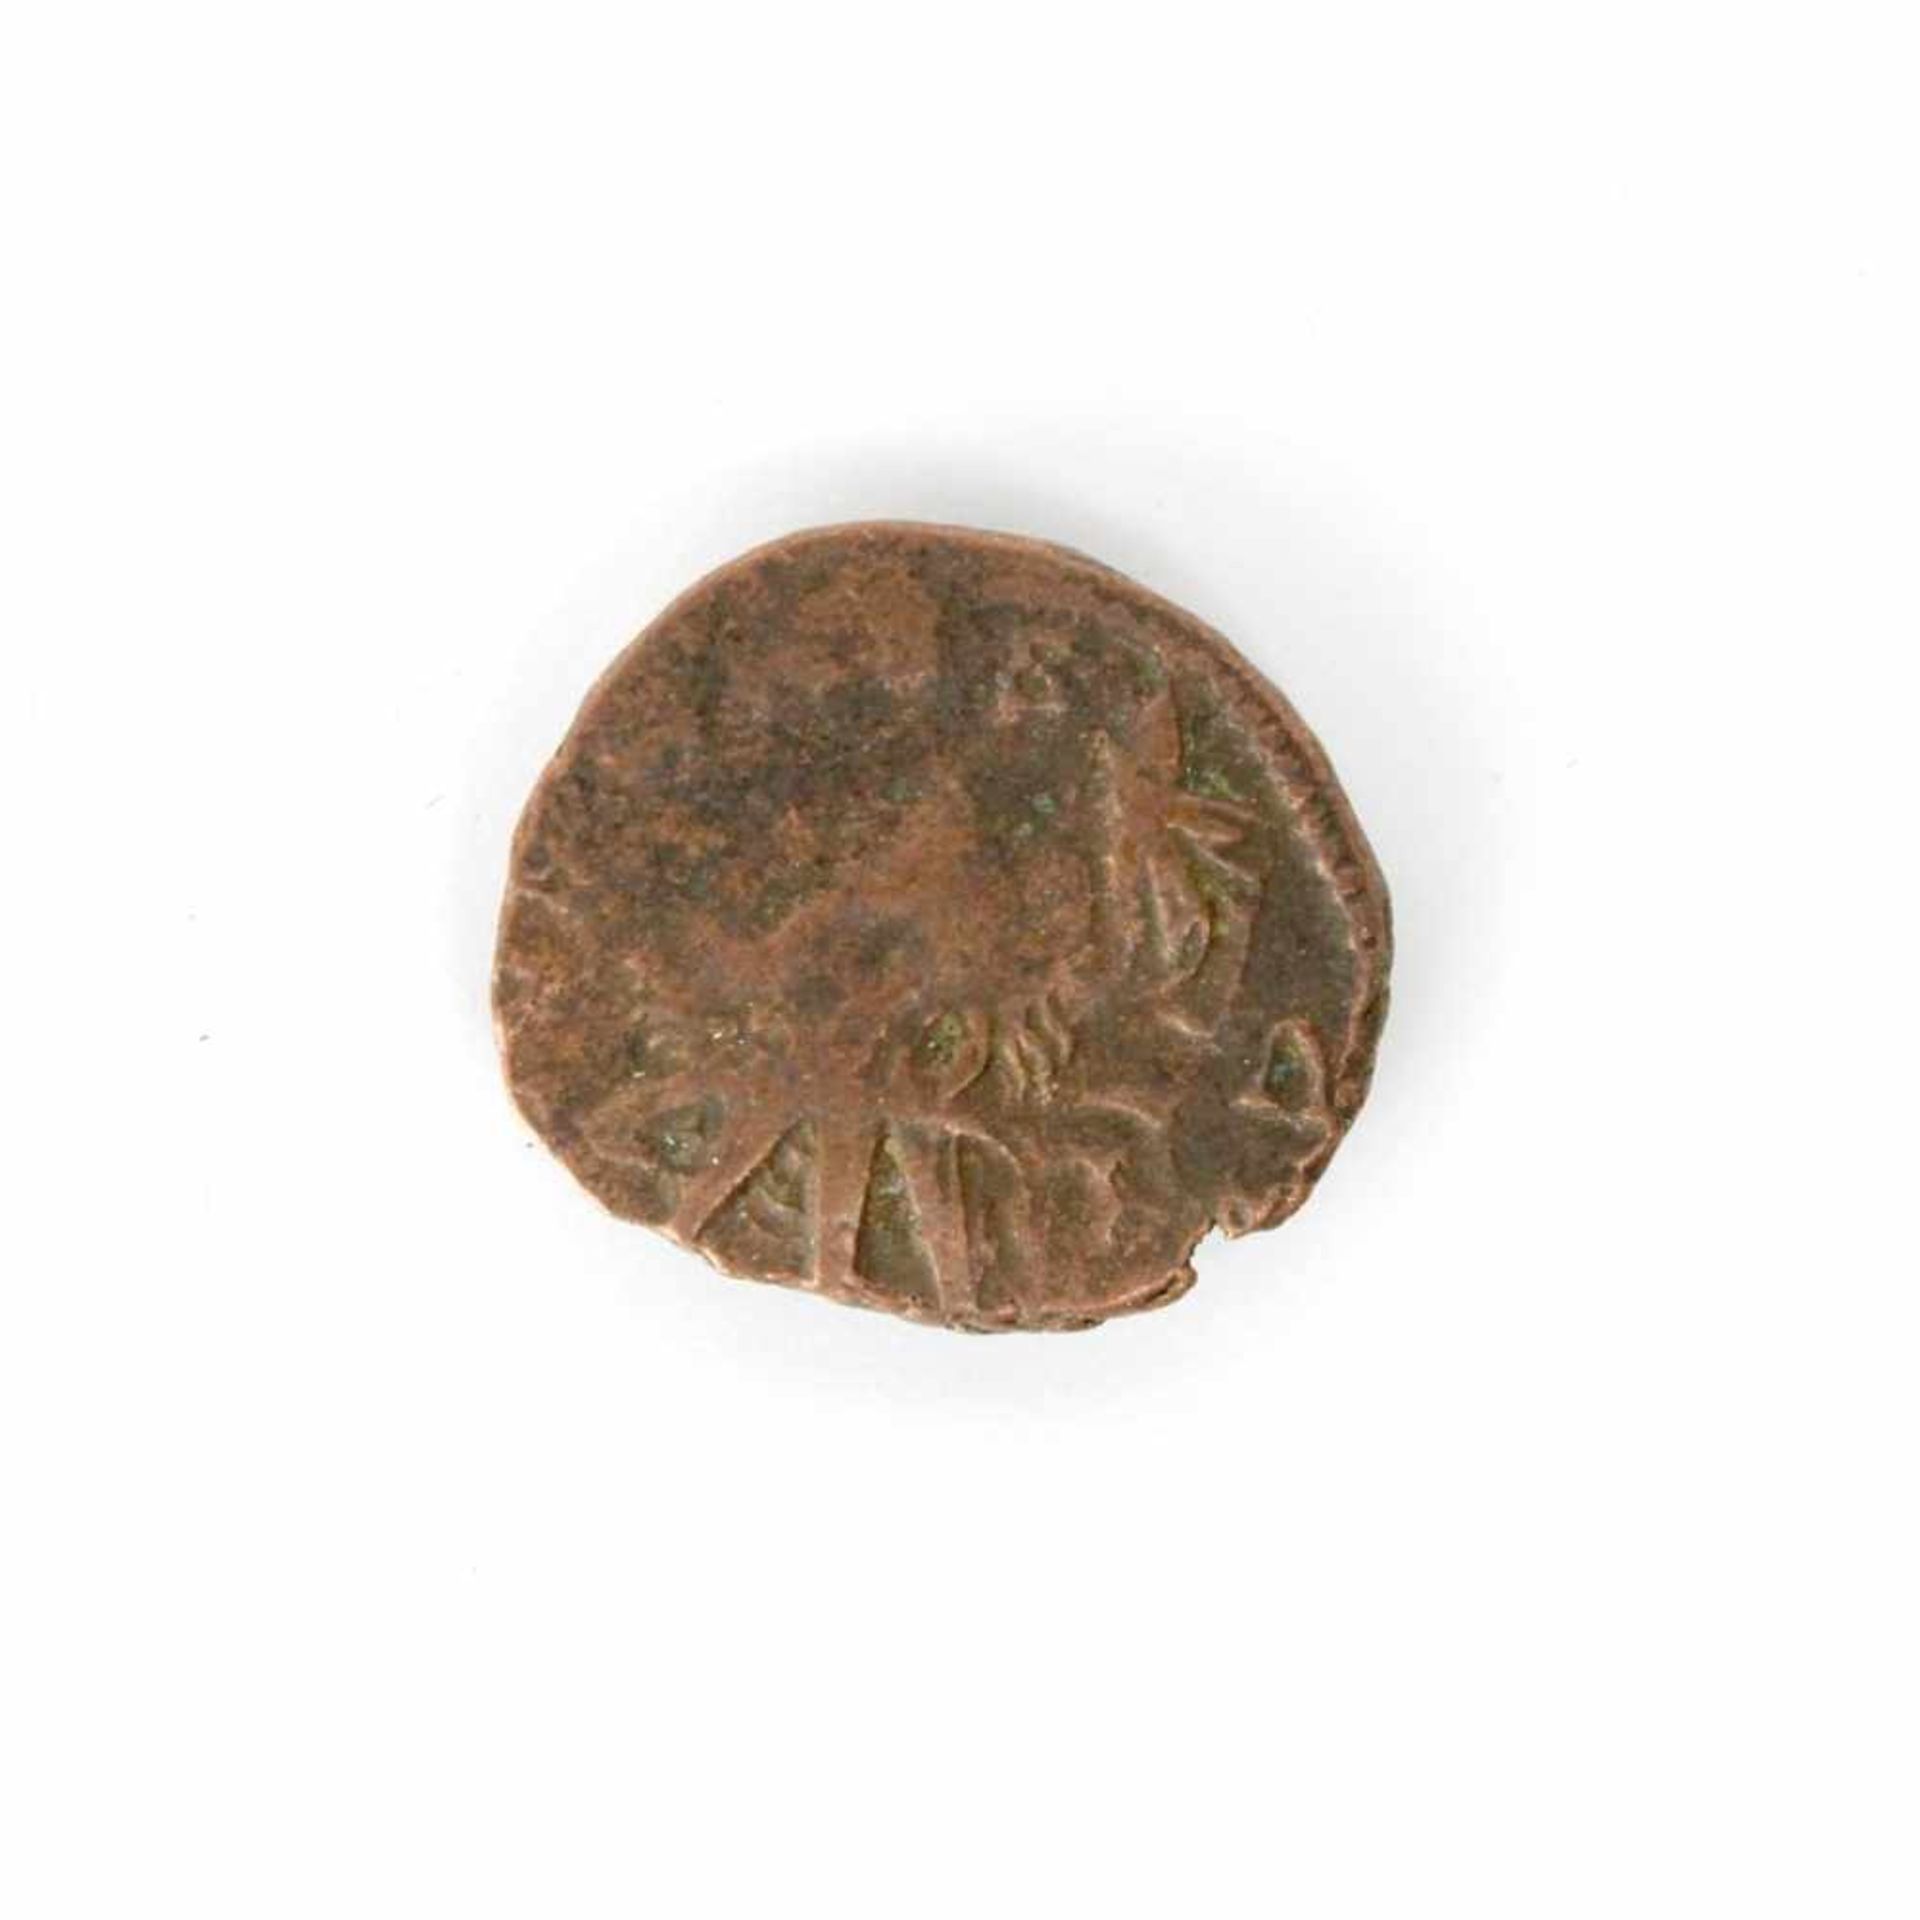 Originale römische Münze " Tetricus II. "<b - Bild 3 aus 3